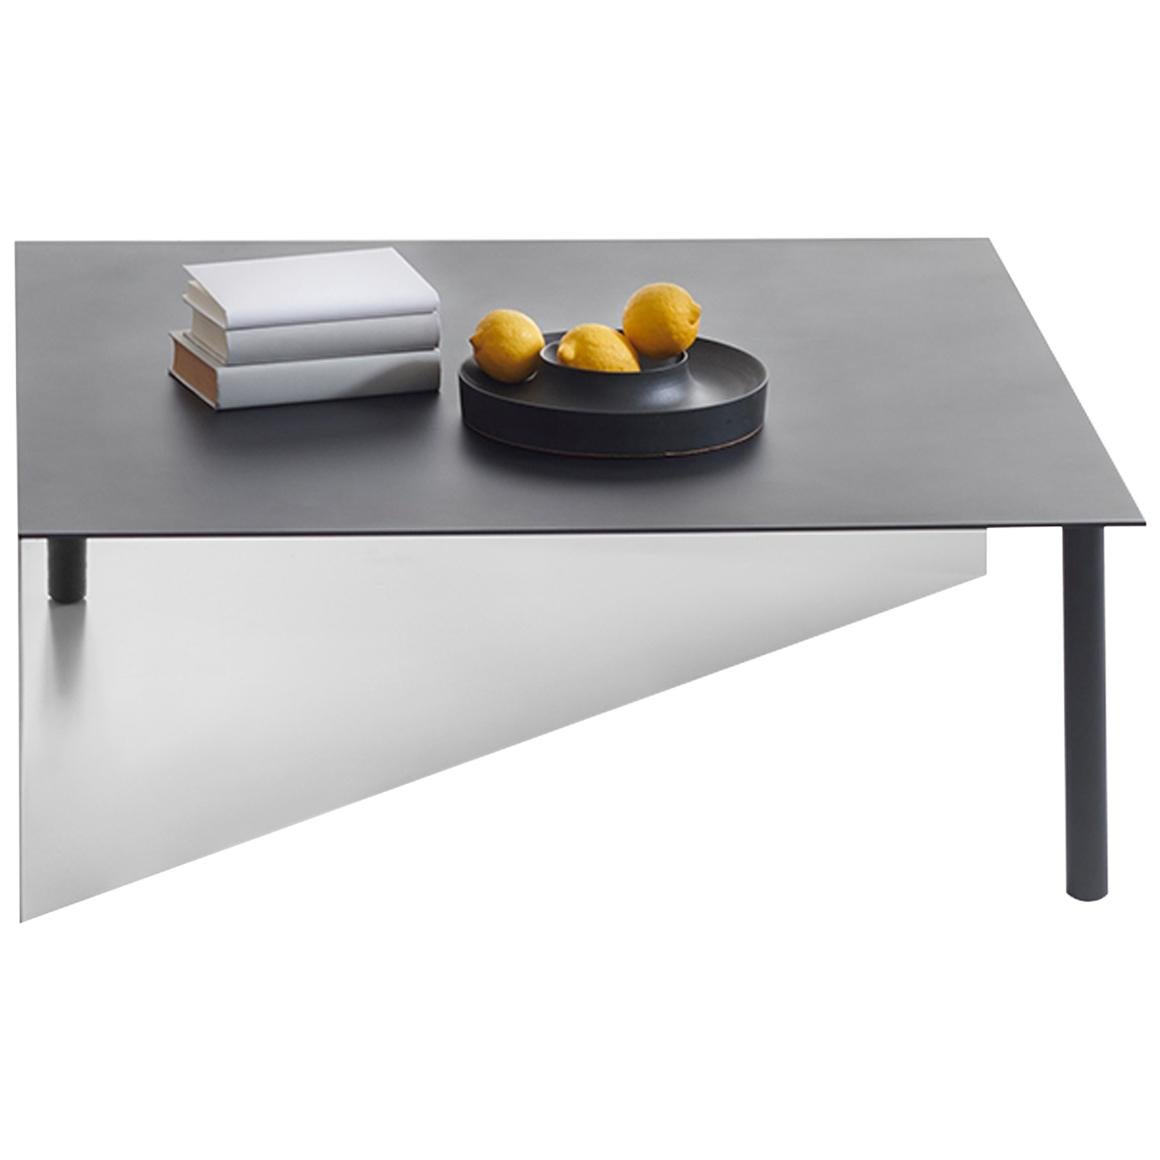 FUCINA "PIATTO" Sam Hecht & Kim Collin, Large Square Table Metal Steel Black For Sale